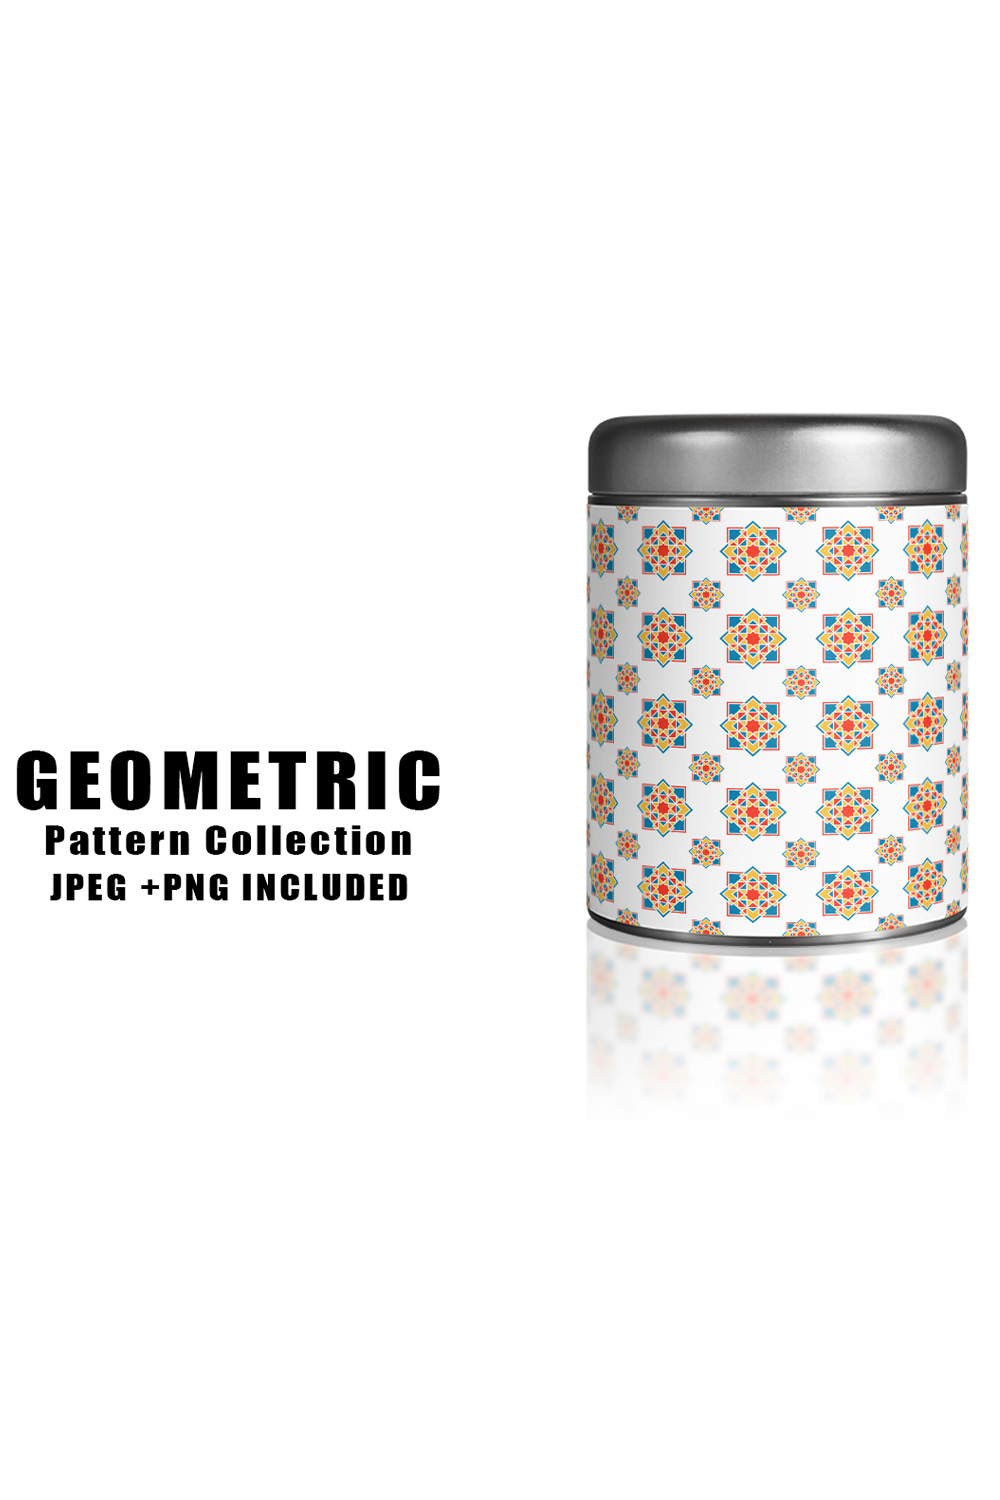 Image of jar with elegant geometric patterns